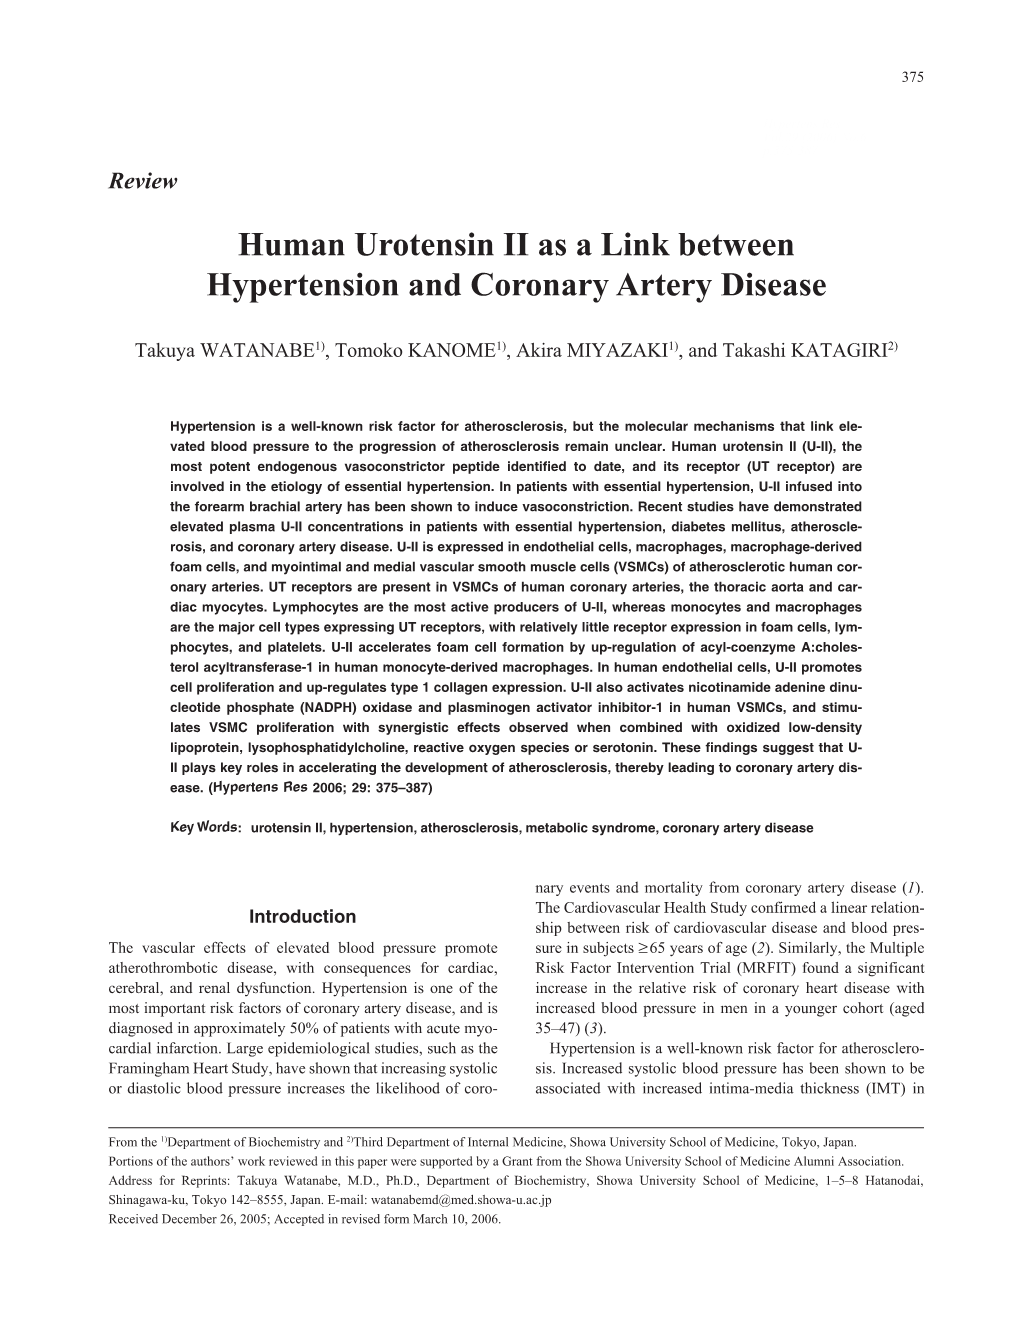 Human Urotensin II As a Link Between Hypertension and Coronary Artery Disease